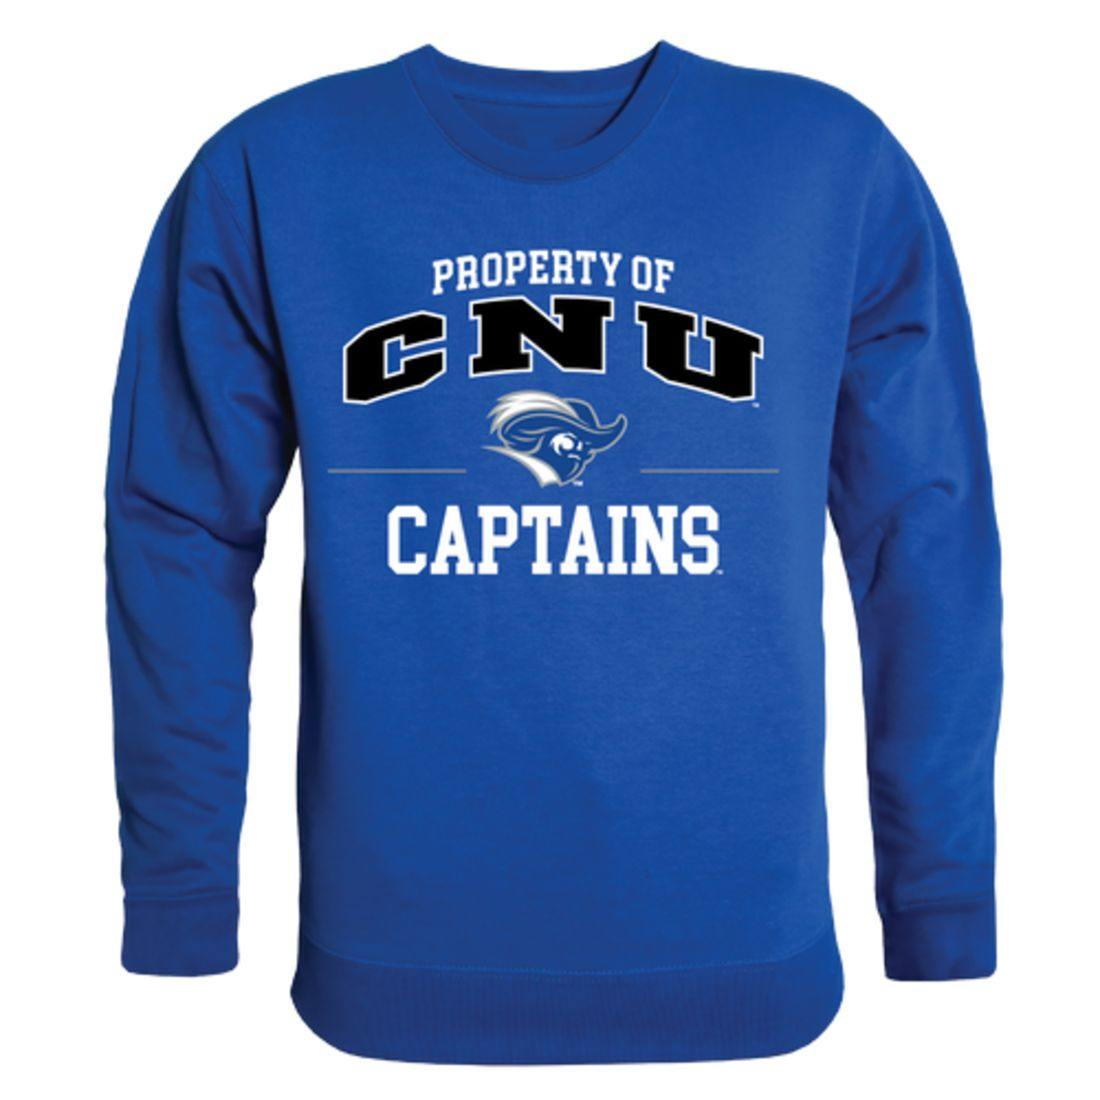 CNU Christopher Newport University Captains Property Crewneck Pullover Sweatshirt Sweater Royal-Campus-Wardrobe